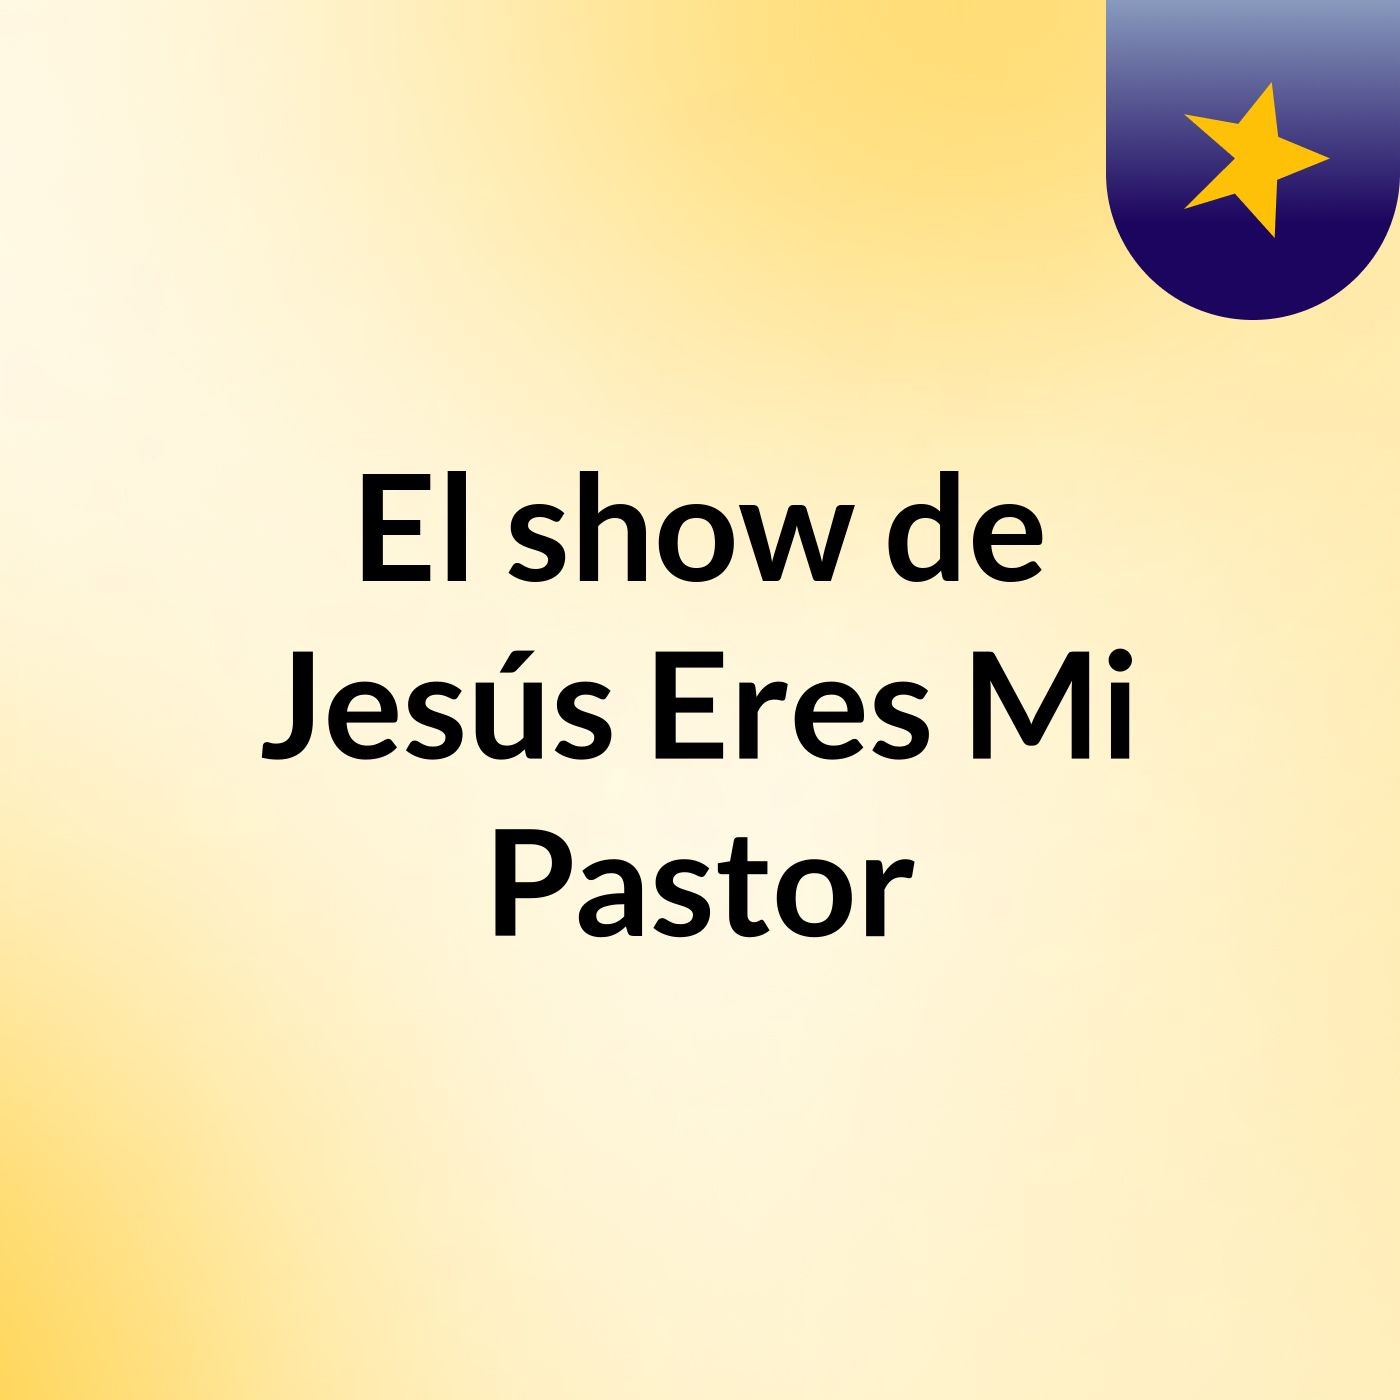 El show de Jesús Eres Mi Pastor